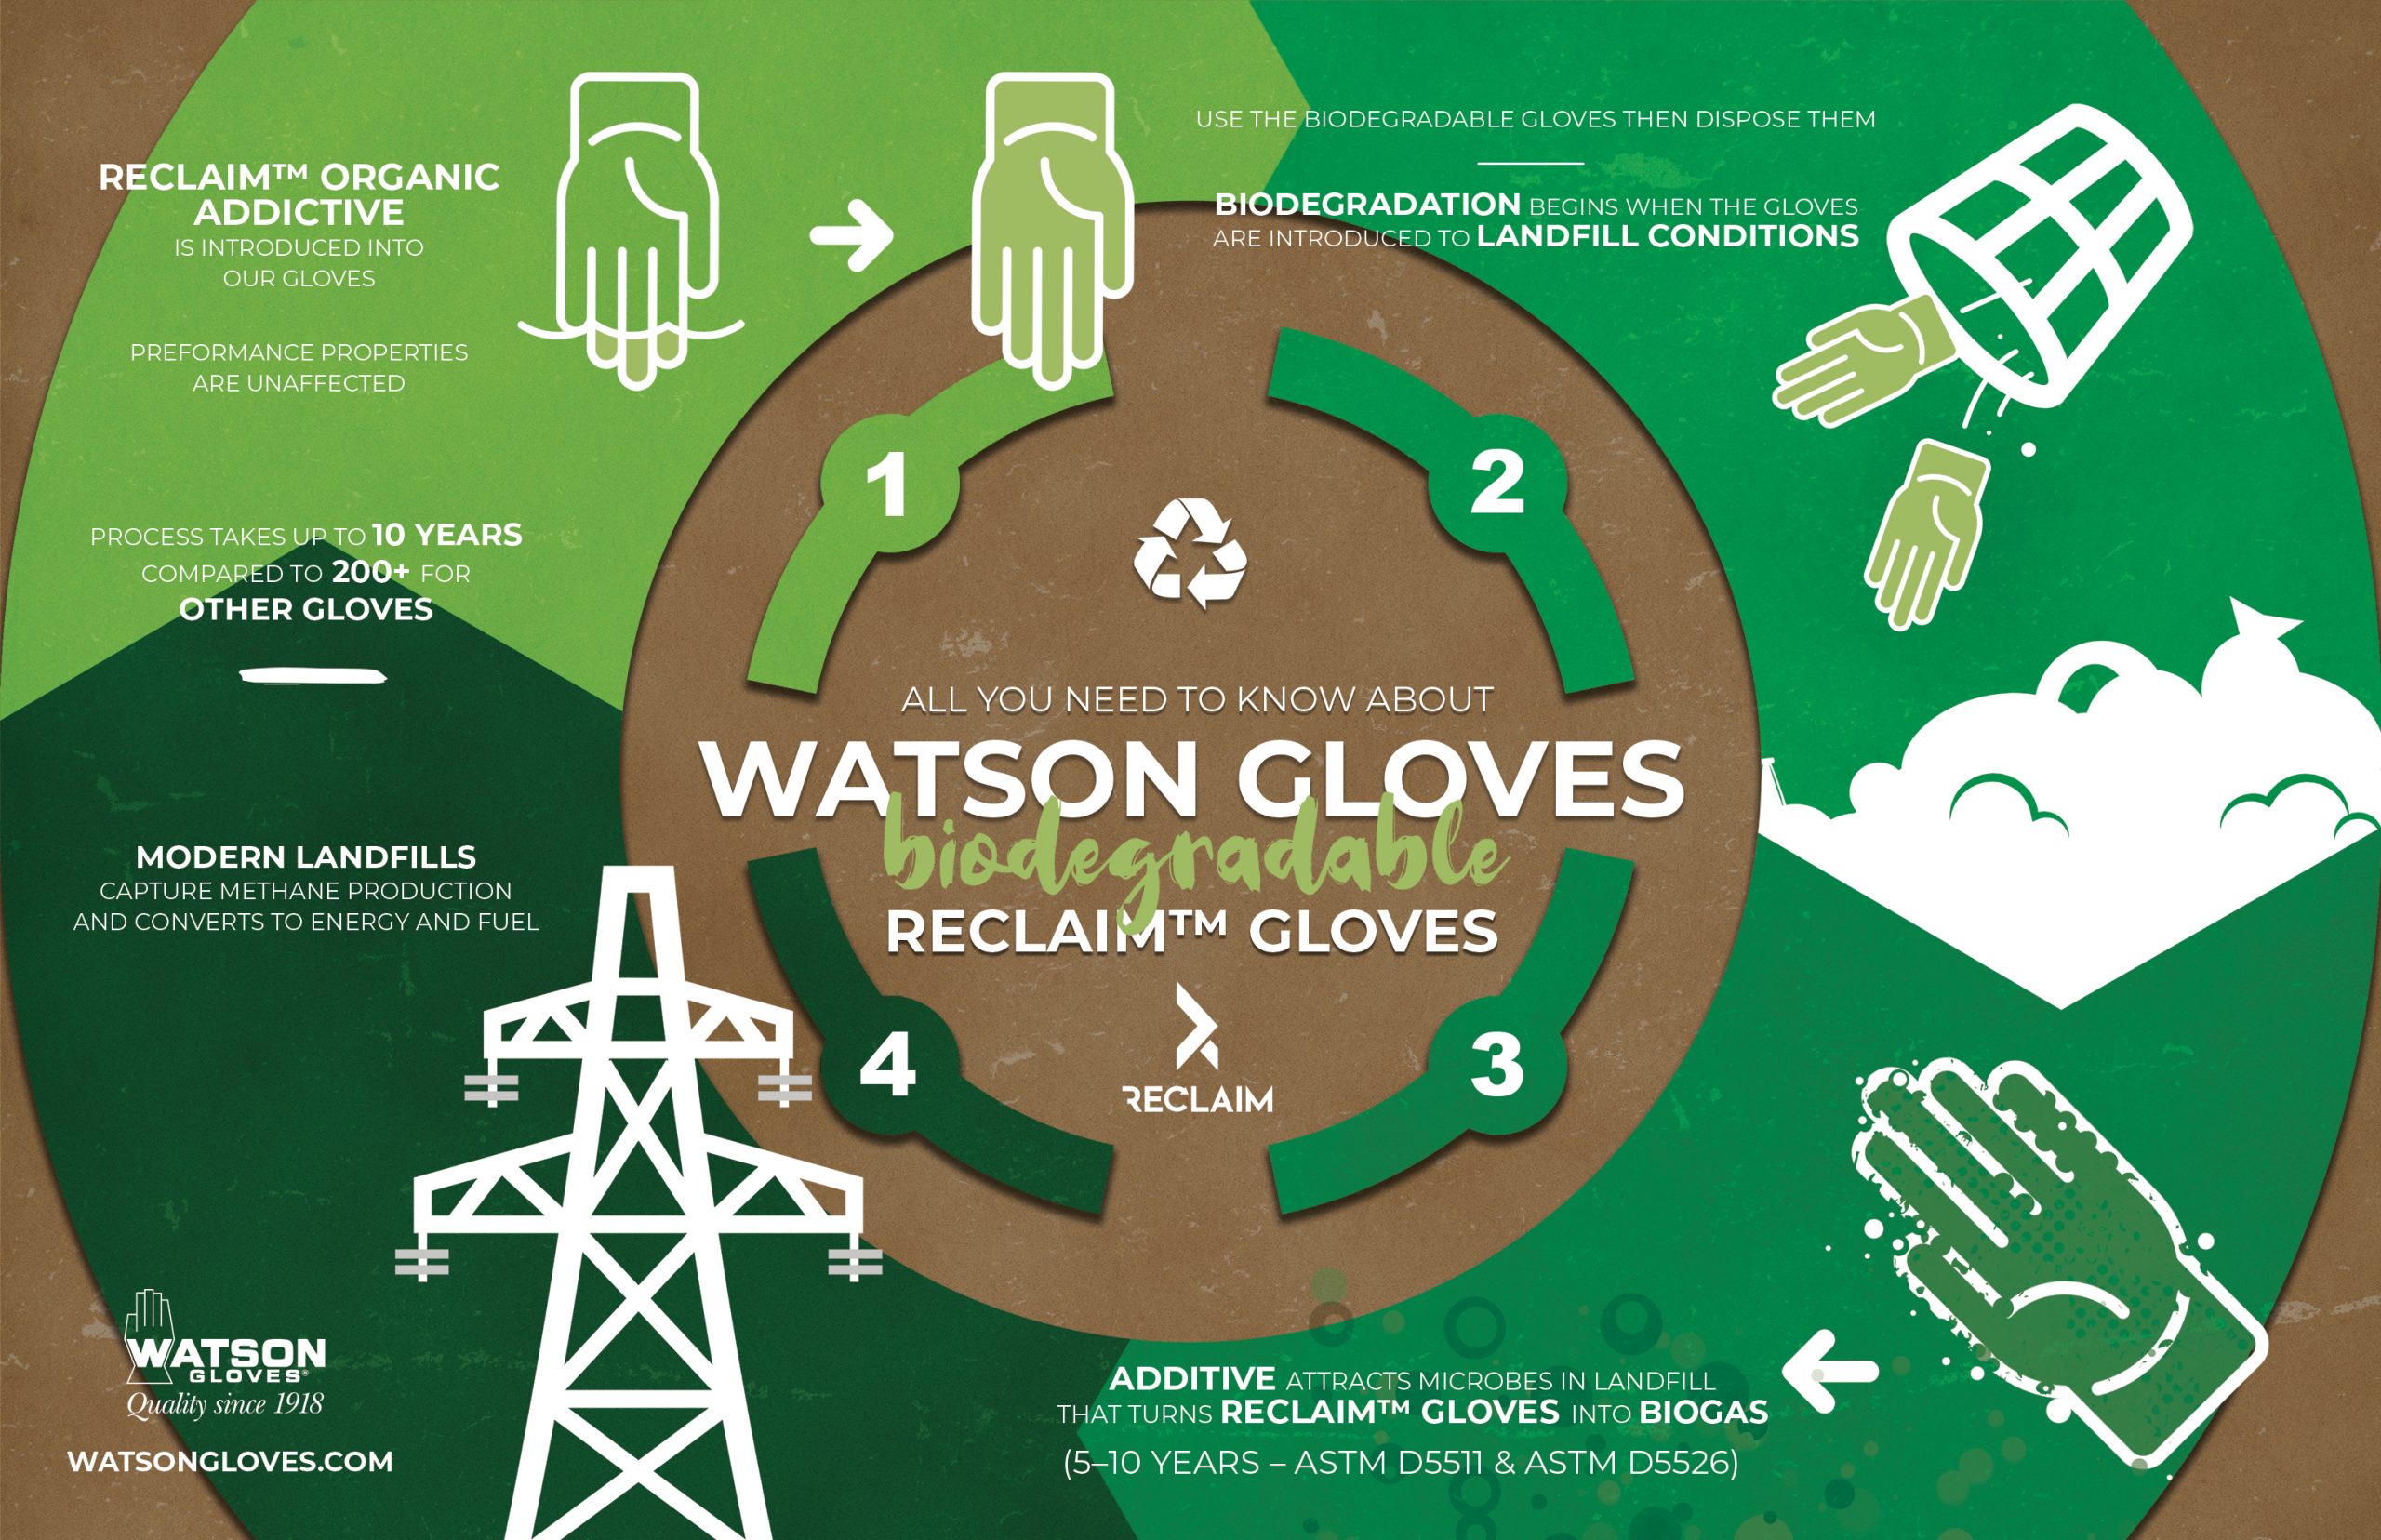 Watson Gloves Biodegradable Reclaim Gloves